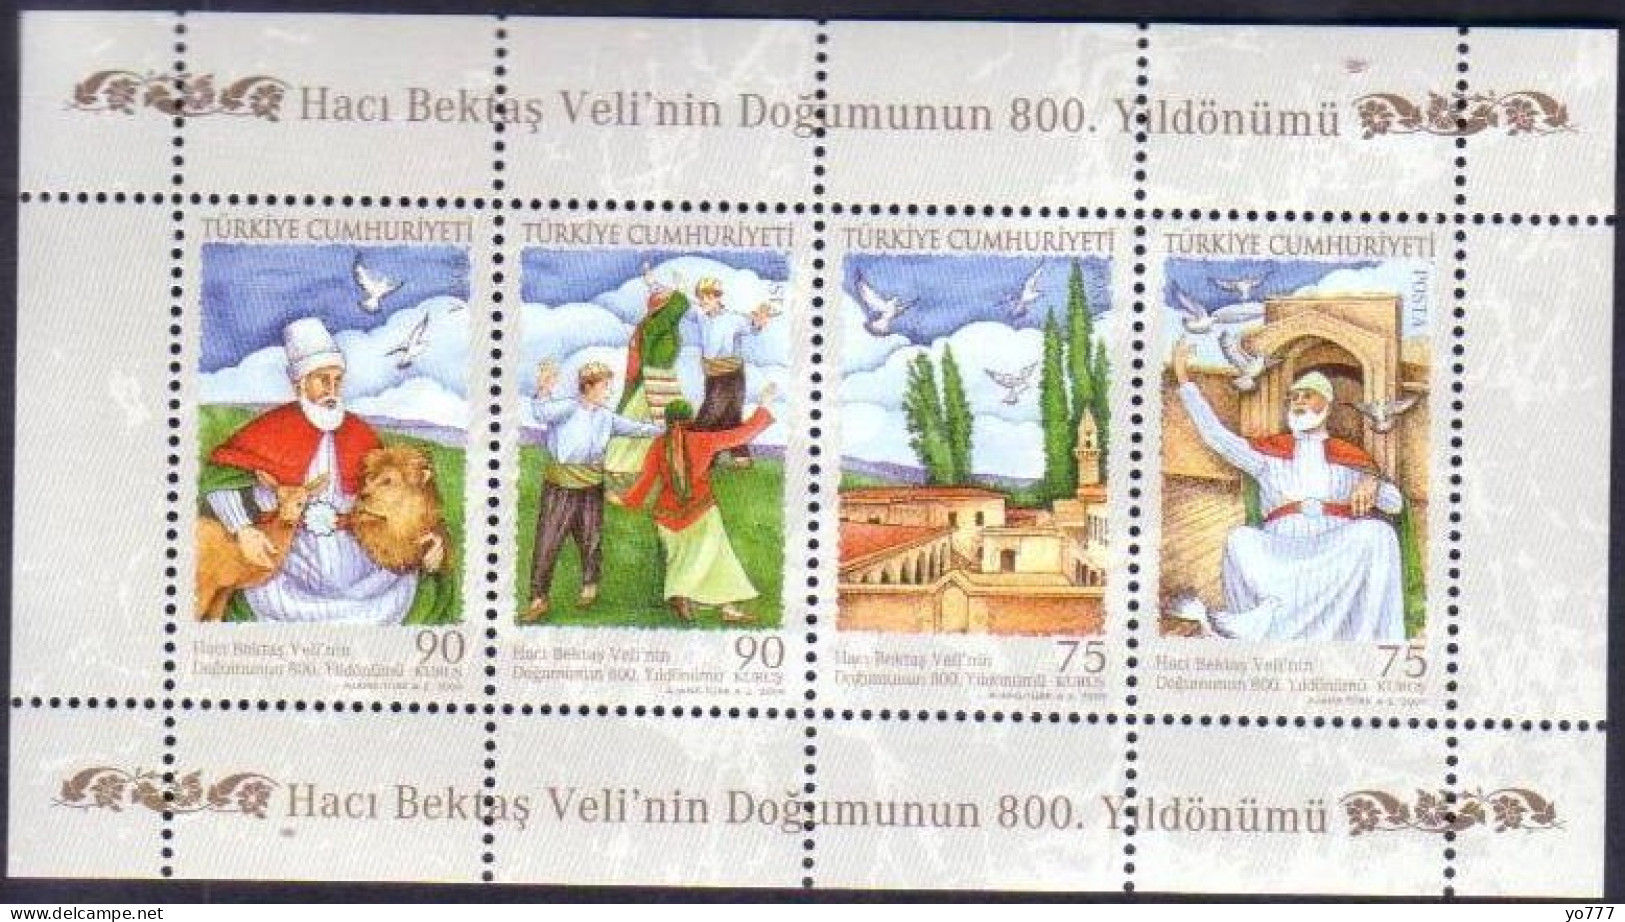 (3773-76) TURKEY 800th ANNIVERSARY OF THE BIRTH OF HACI BEKTAS VELI SOUVENIR SHEET MNH** - Nuevos